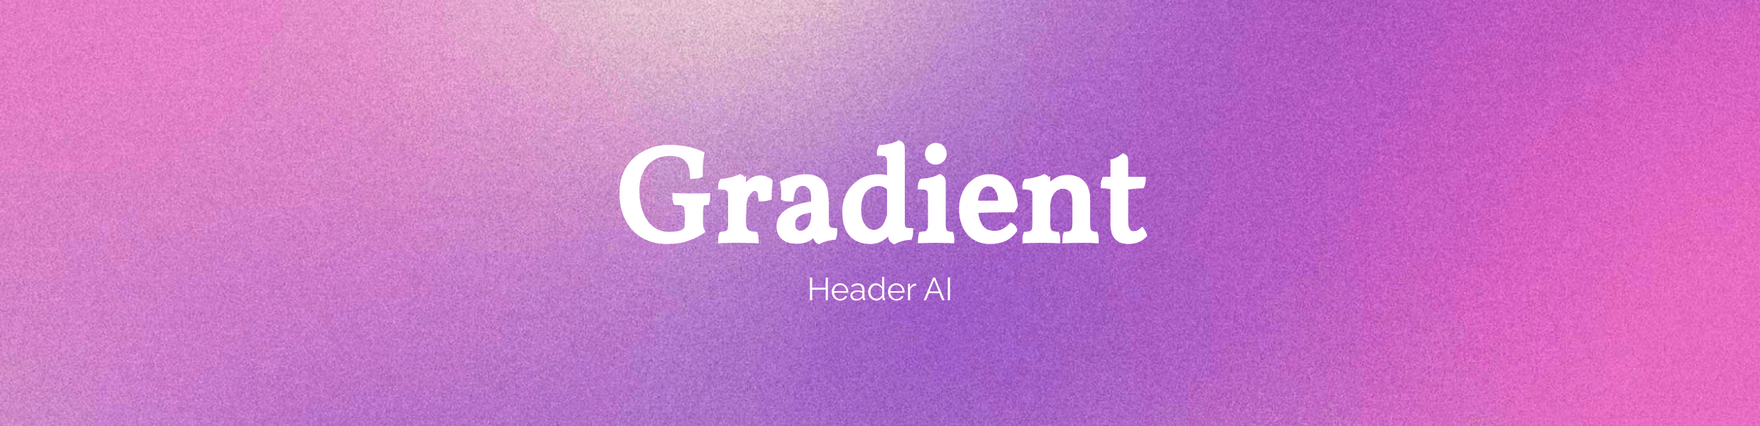 Gradient Header AI Template